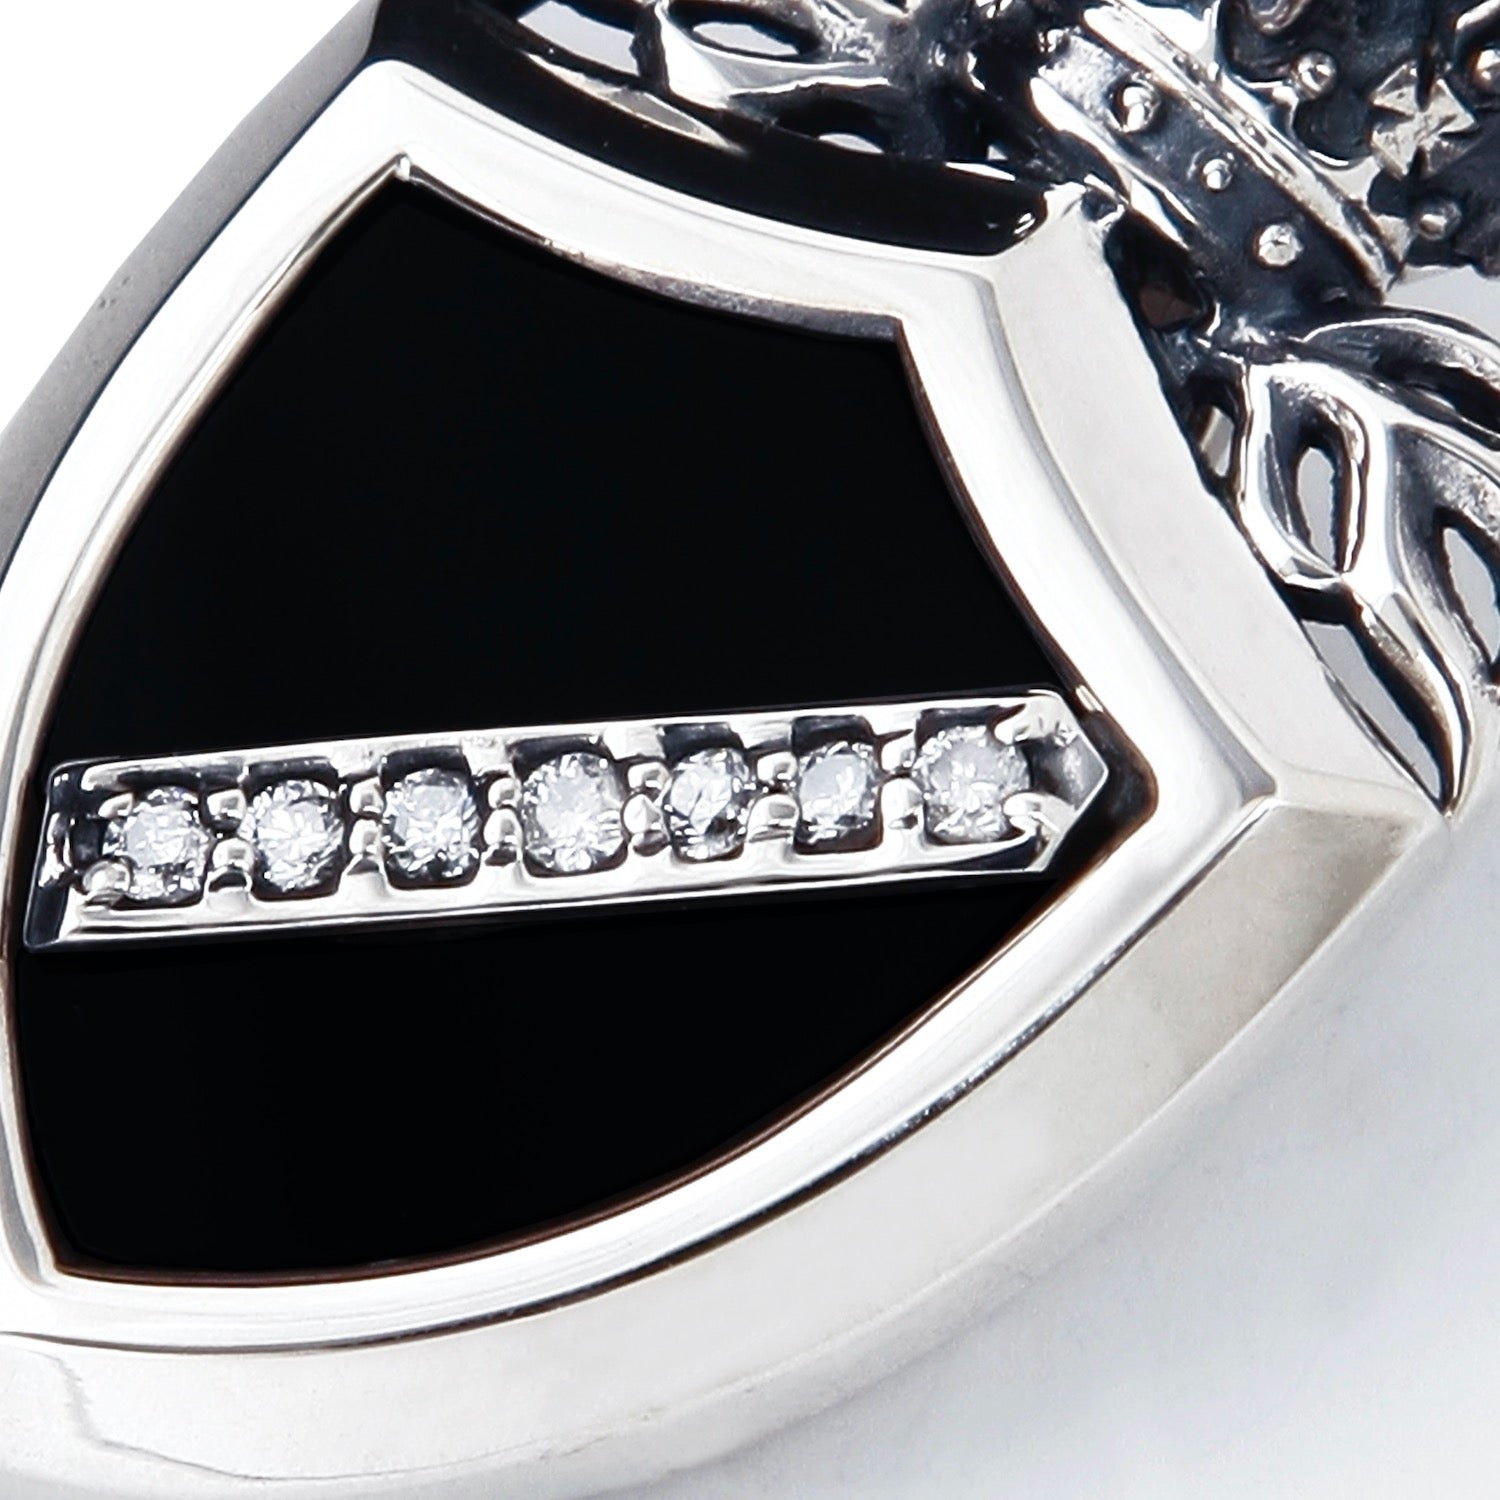 JustinDavis Crown Shield Pendant & Chain素材Silver925